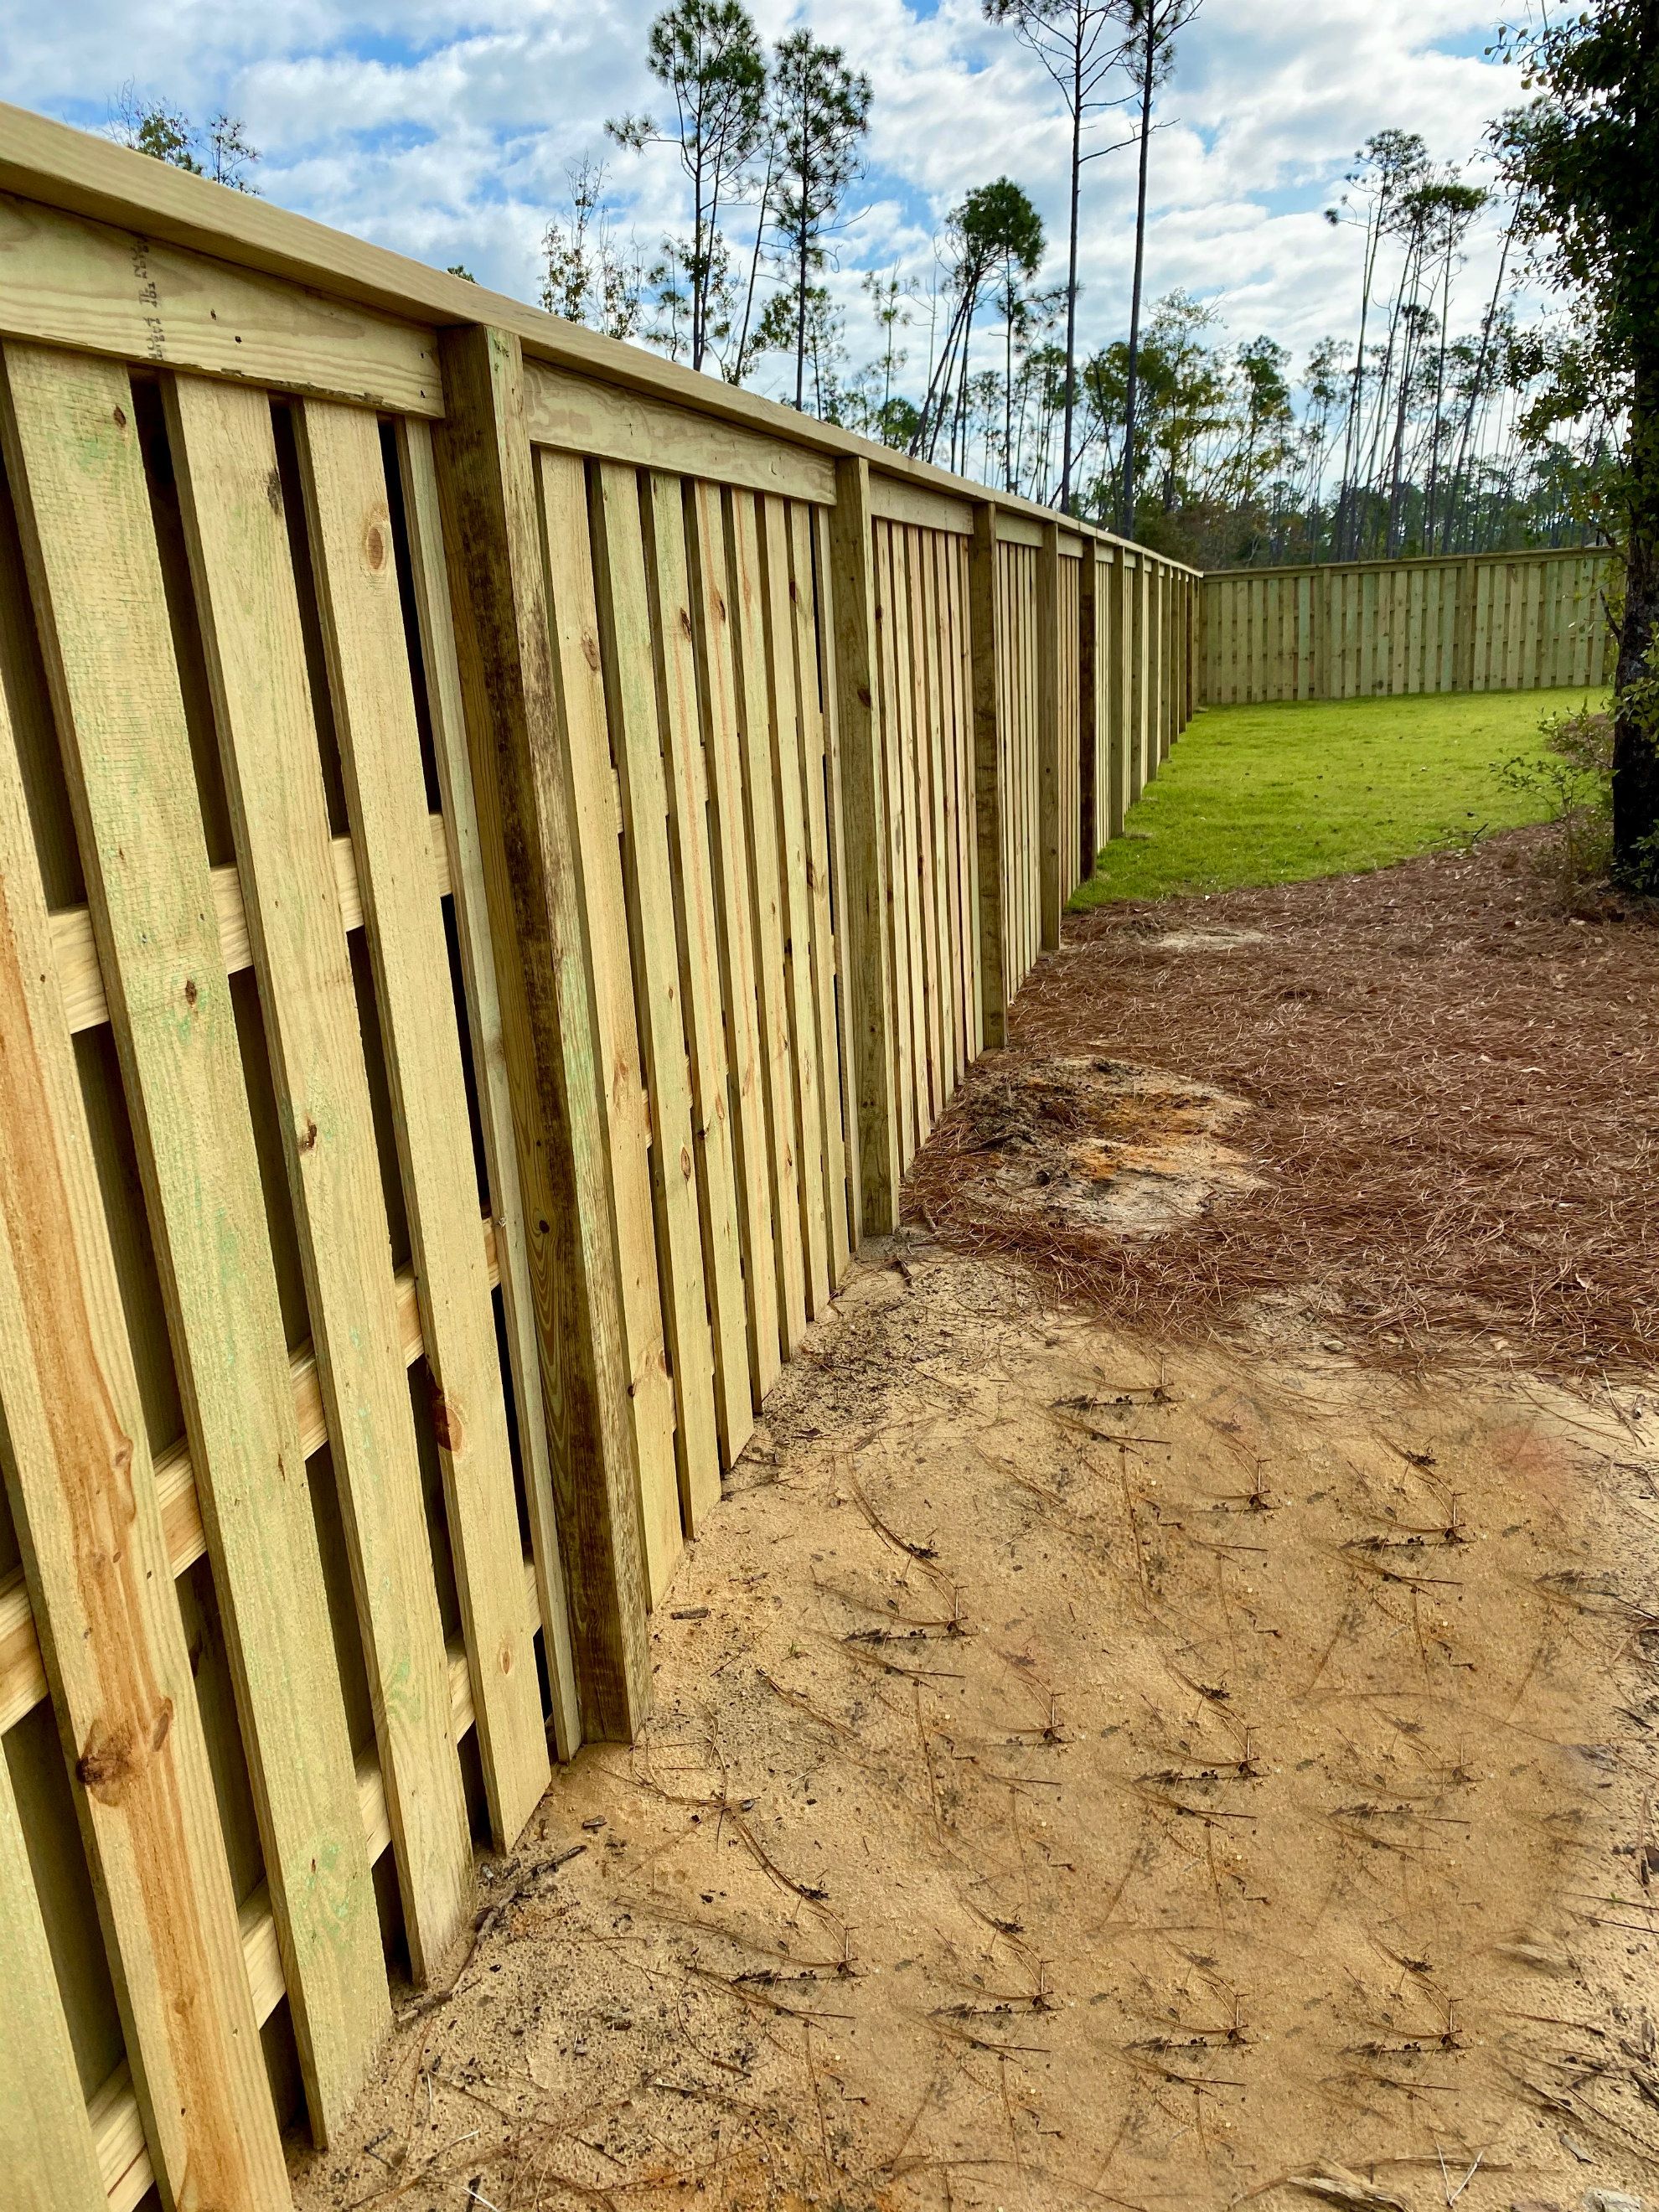 Types of fences we install in Port St. Joe FL